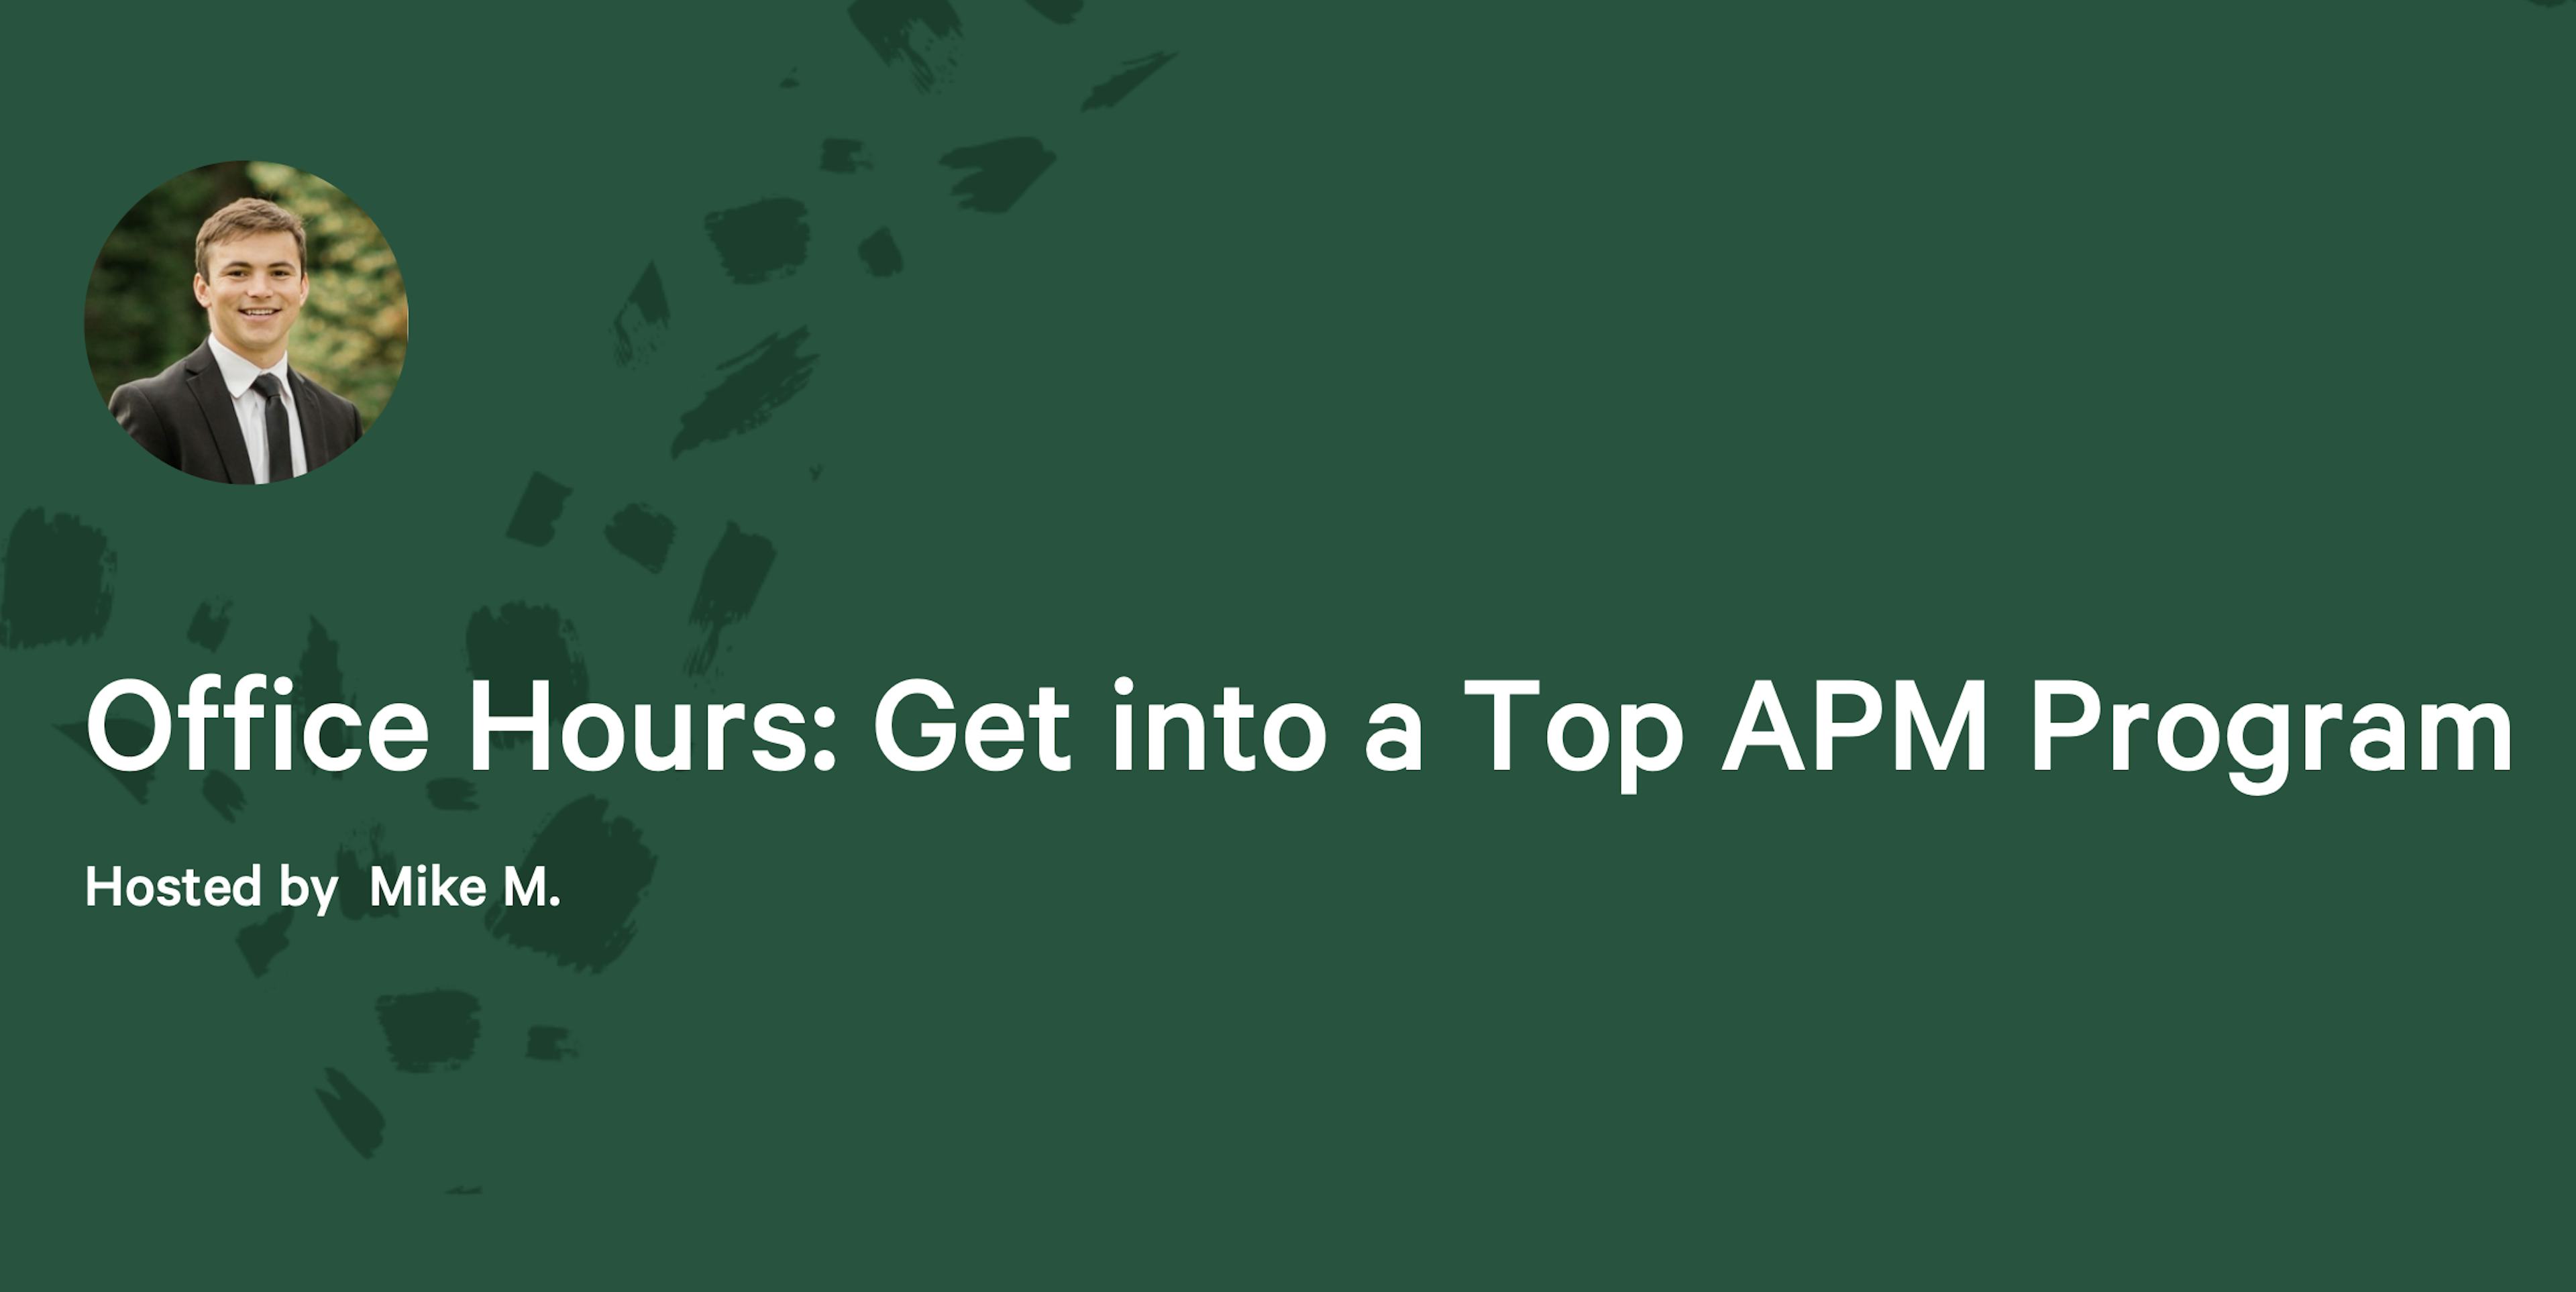 Office Hours: Get into a Top APM Program